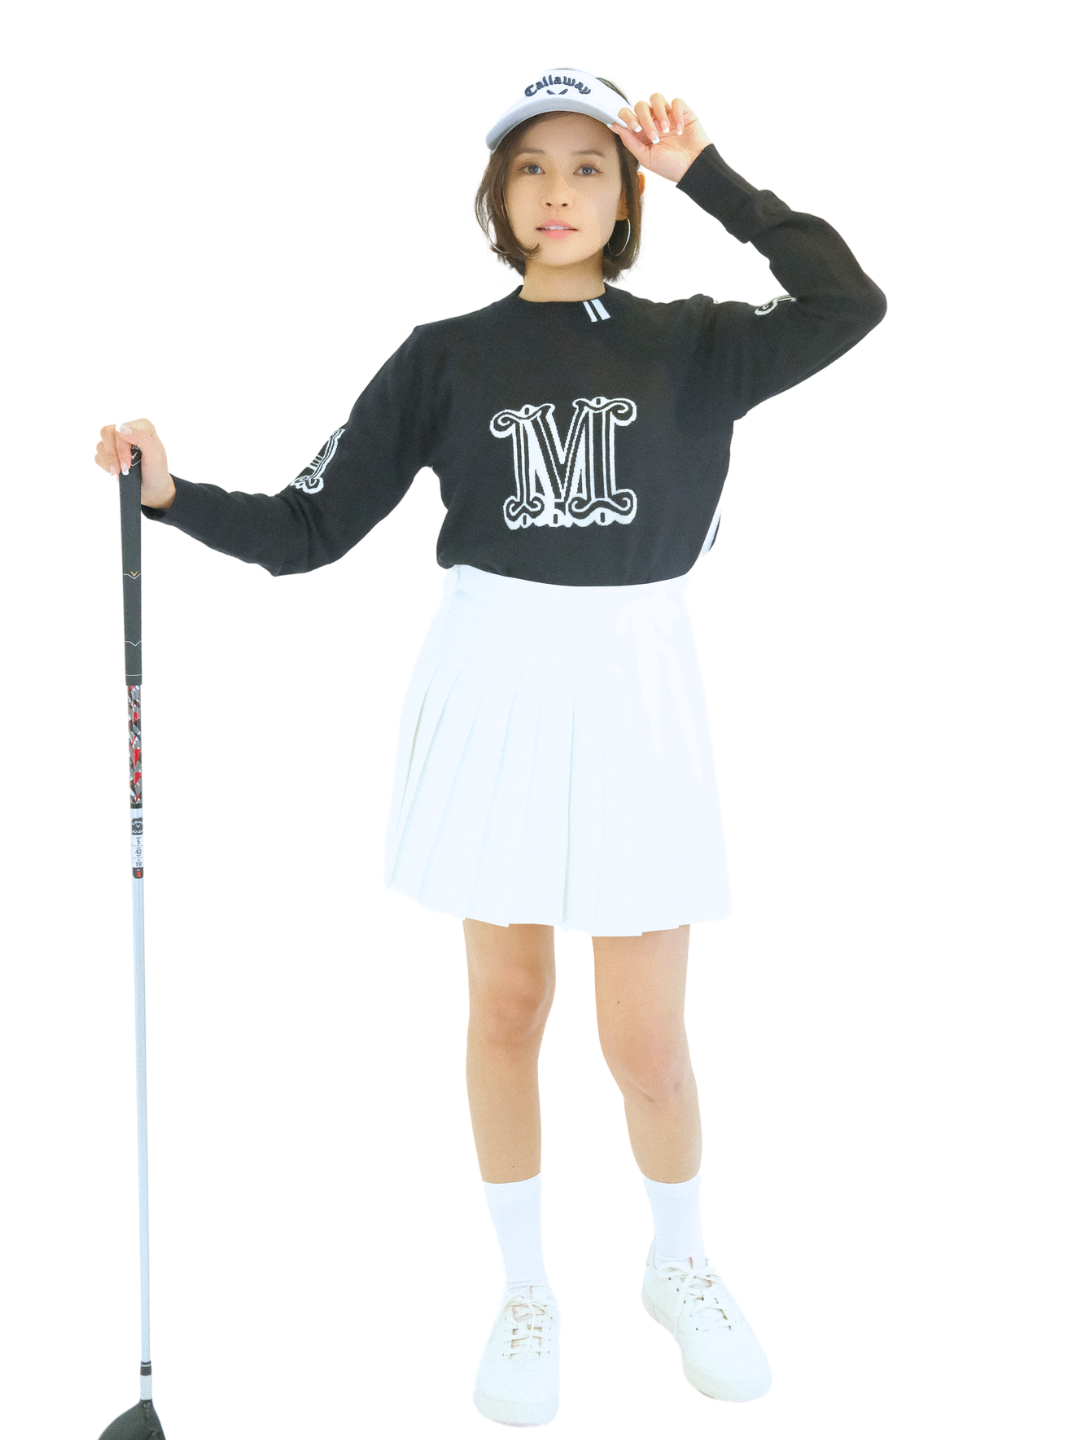 Pakaian Golf Wanita Ratu Hijau si007